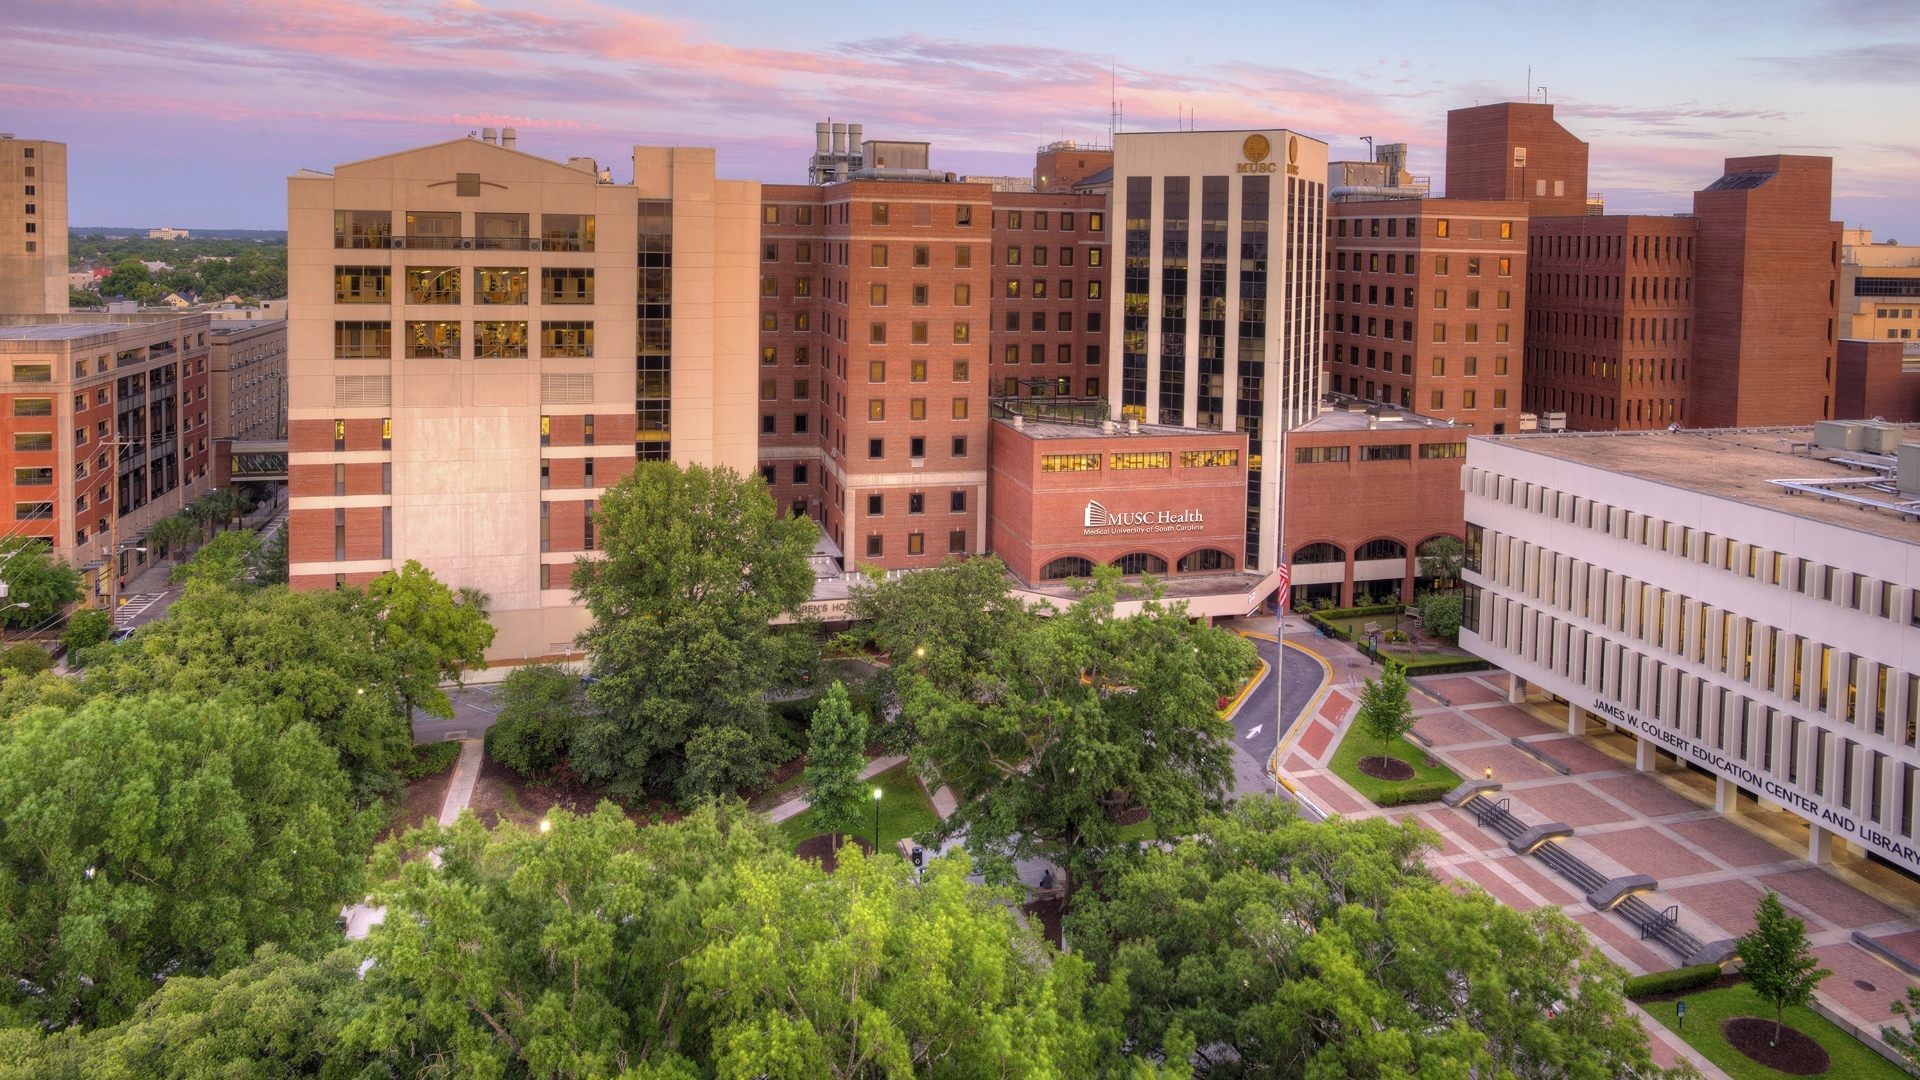 1920x1080 Medical University of South Carolina (MUSC)